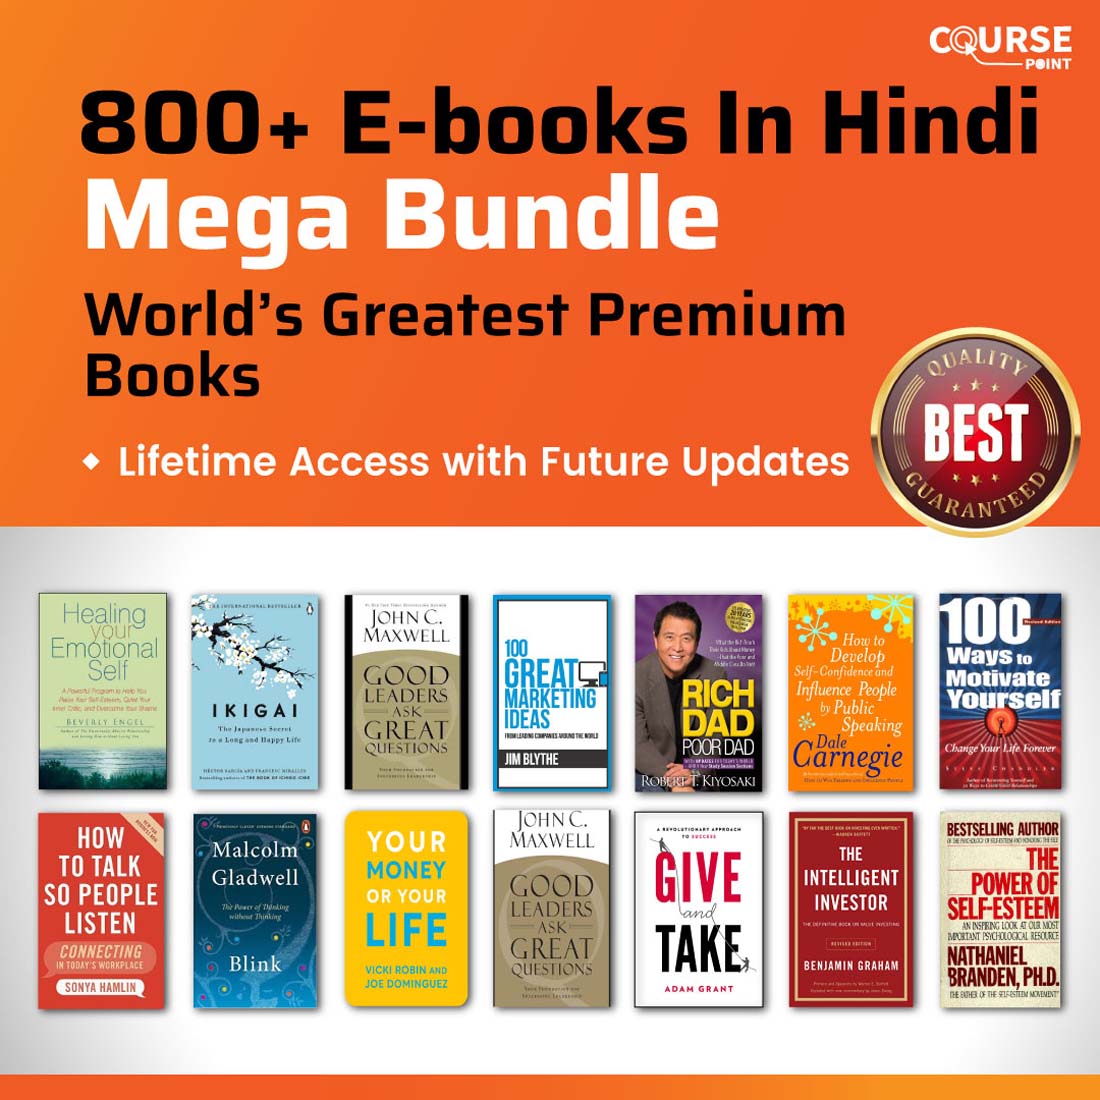 800+ E-books Mega Bundle ( in Hindi ) – World’s Greatest Premium Books cover image.